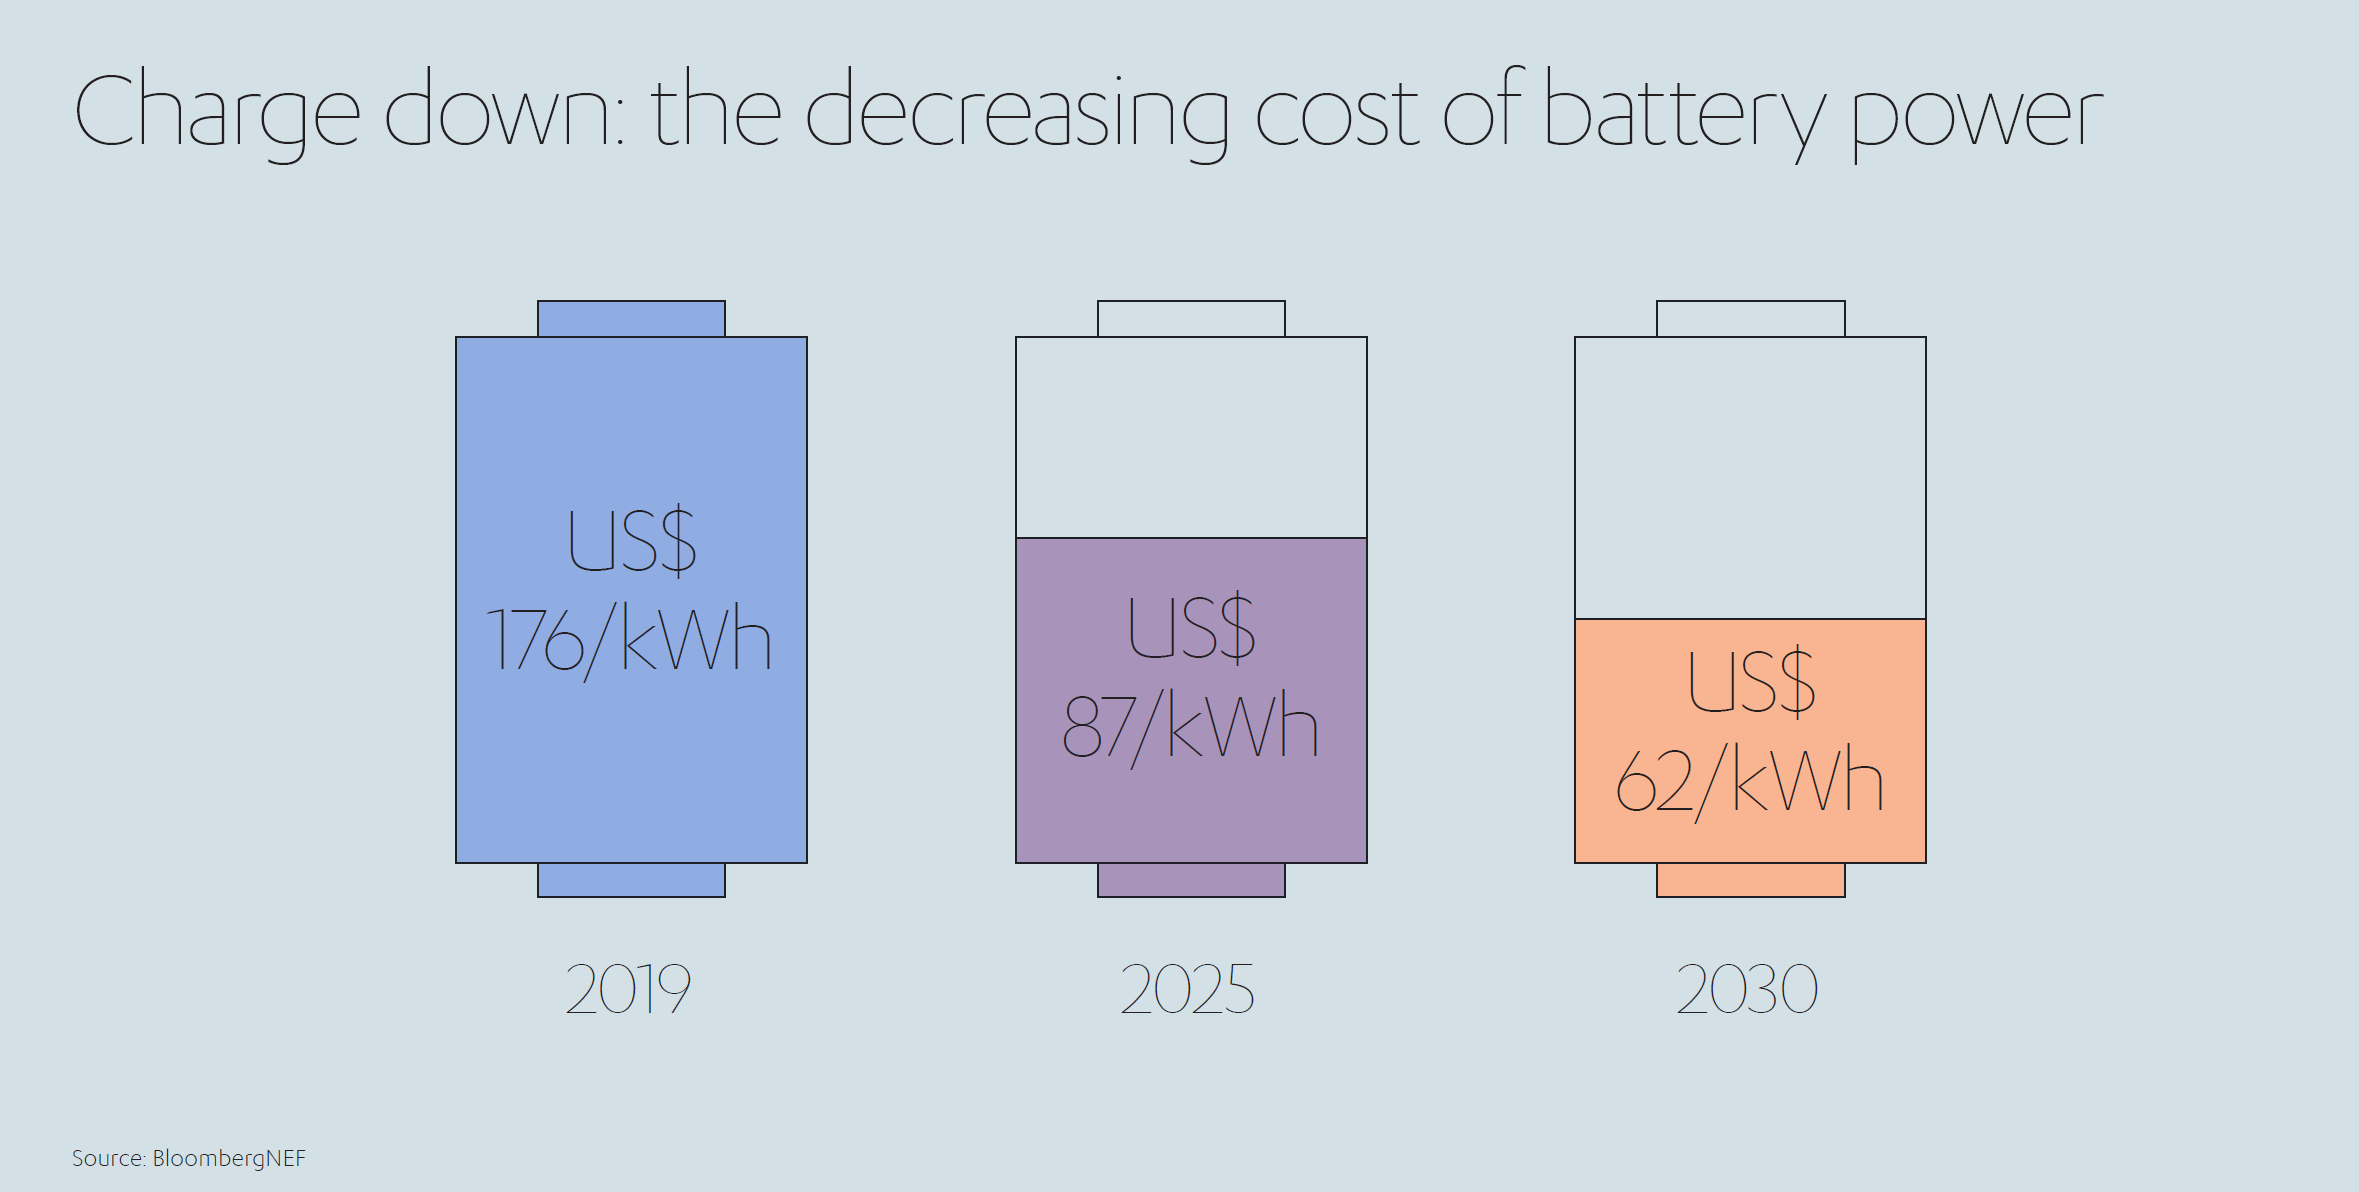 Decreasing Cost of Battery Power